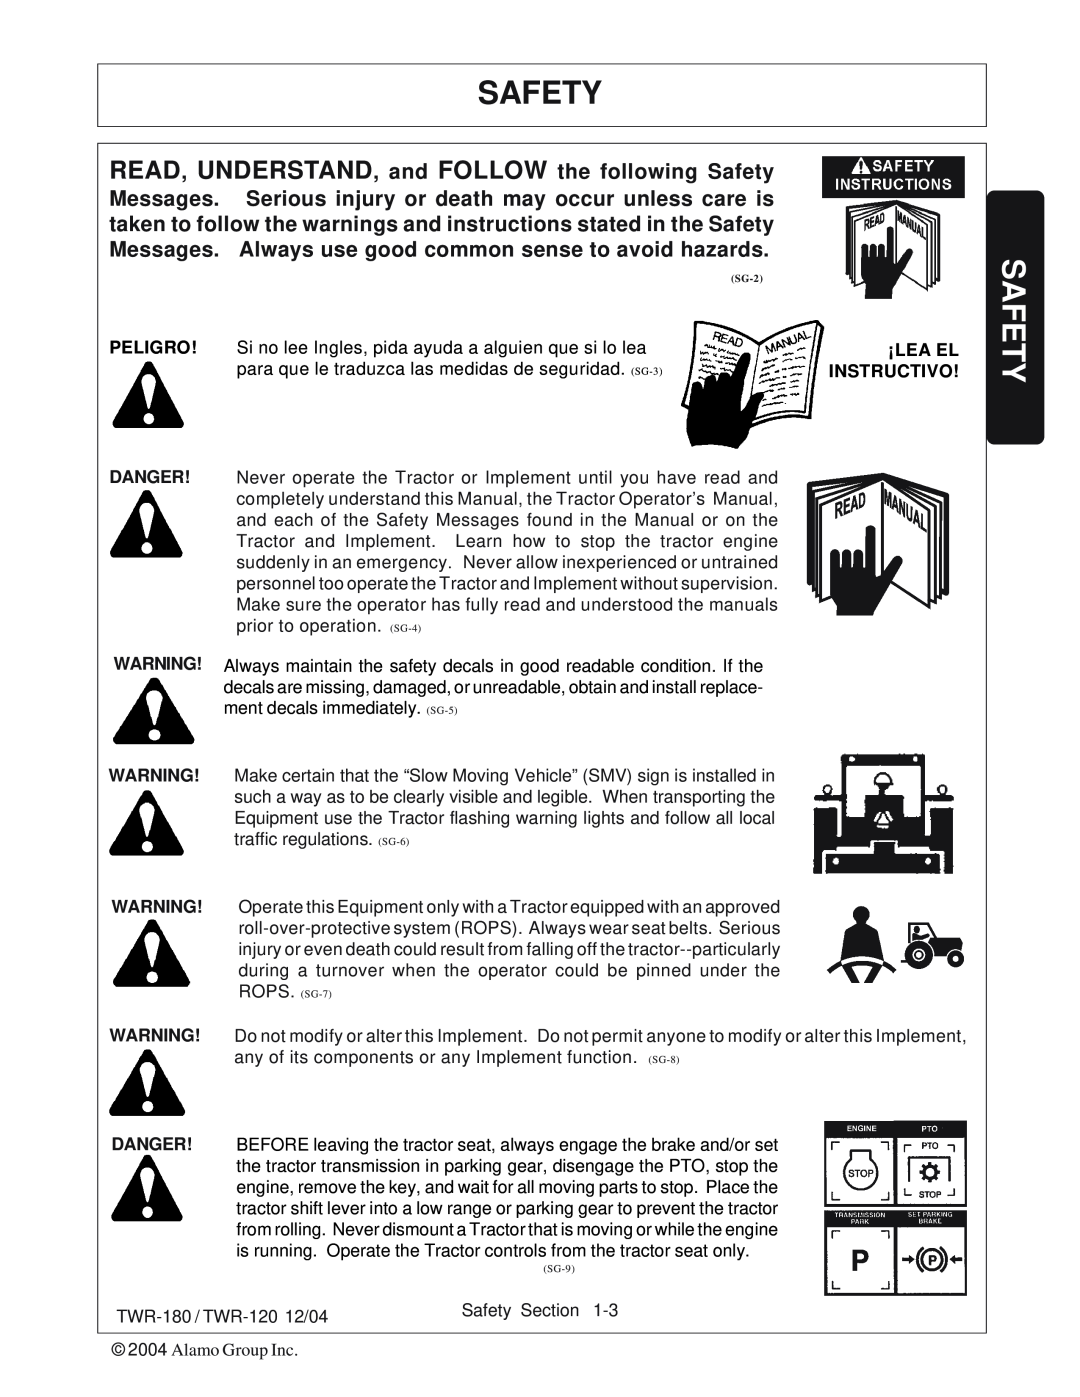 Tiger Products Co., Ltd TWR-120, TWR-180 manual Safety, ¡Lea El Instructivo 